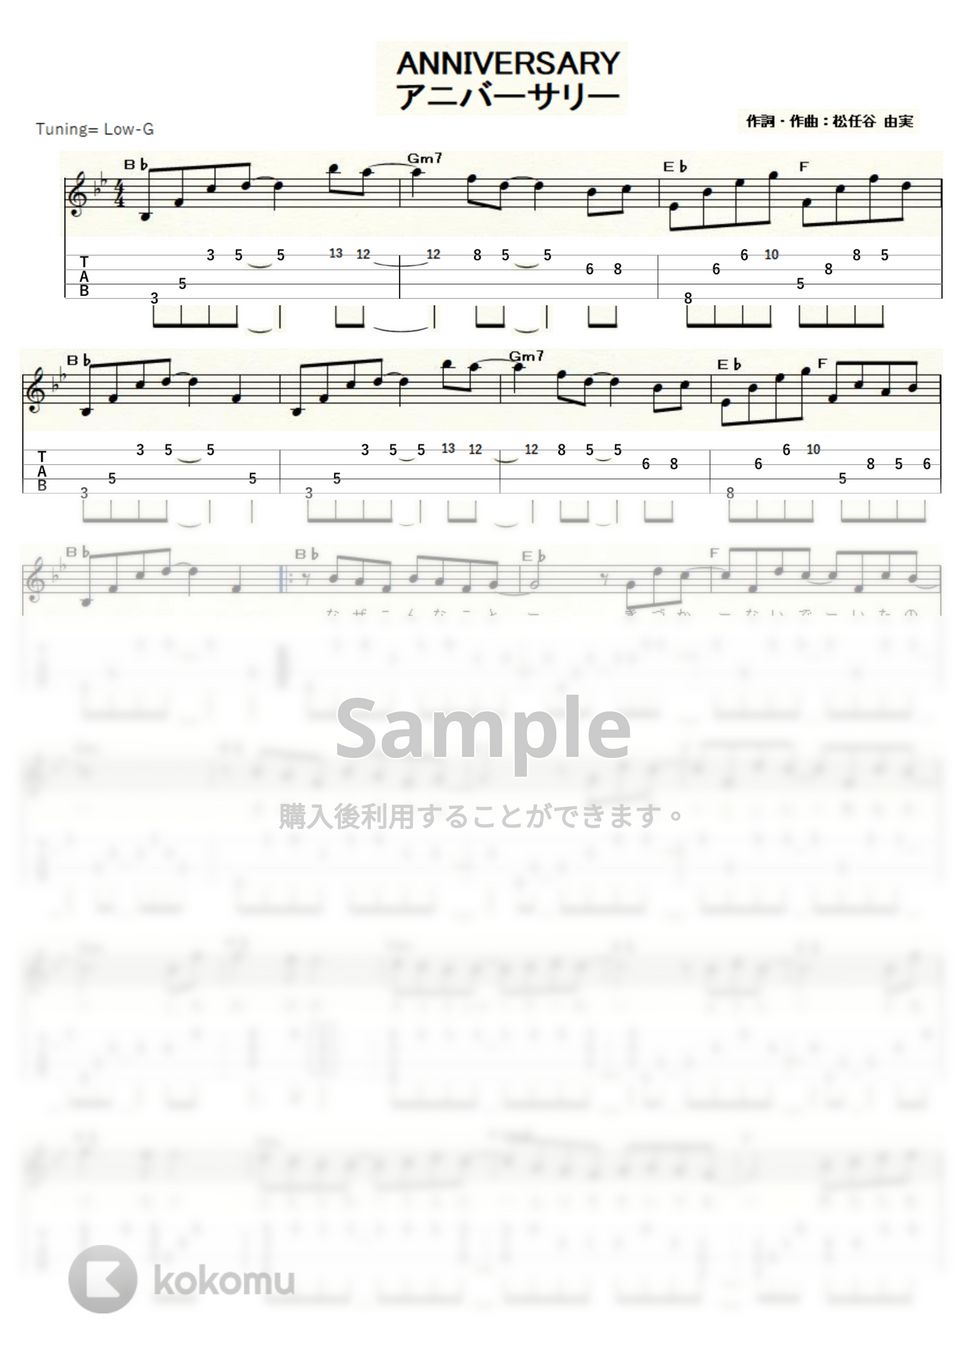 松任谷 由実 - ANNIVERSARY (ｳｸﾚﾚｿﾛ / Low-G / 中級) by ukulelepapa